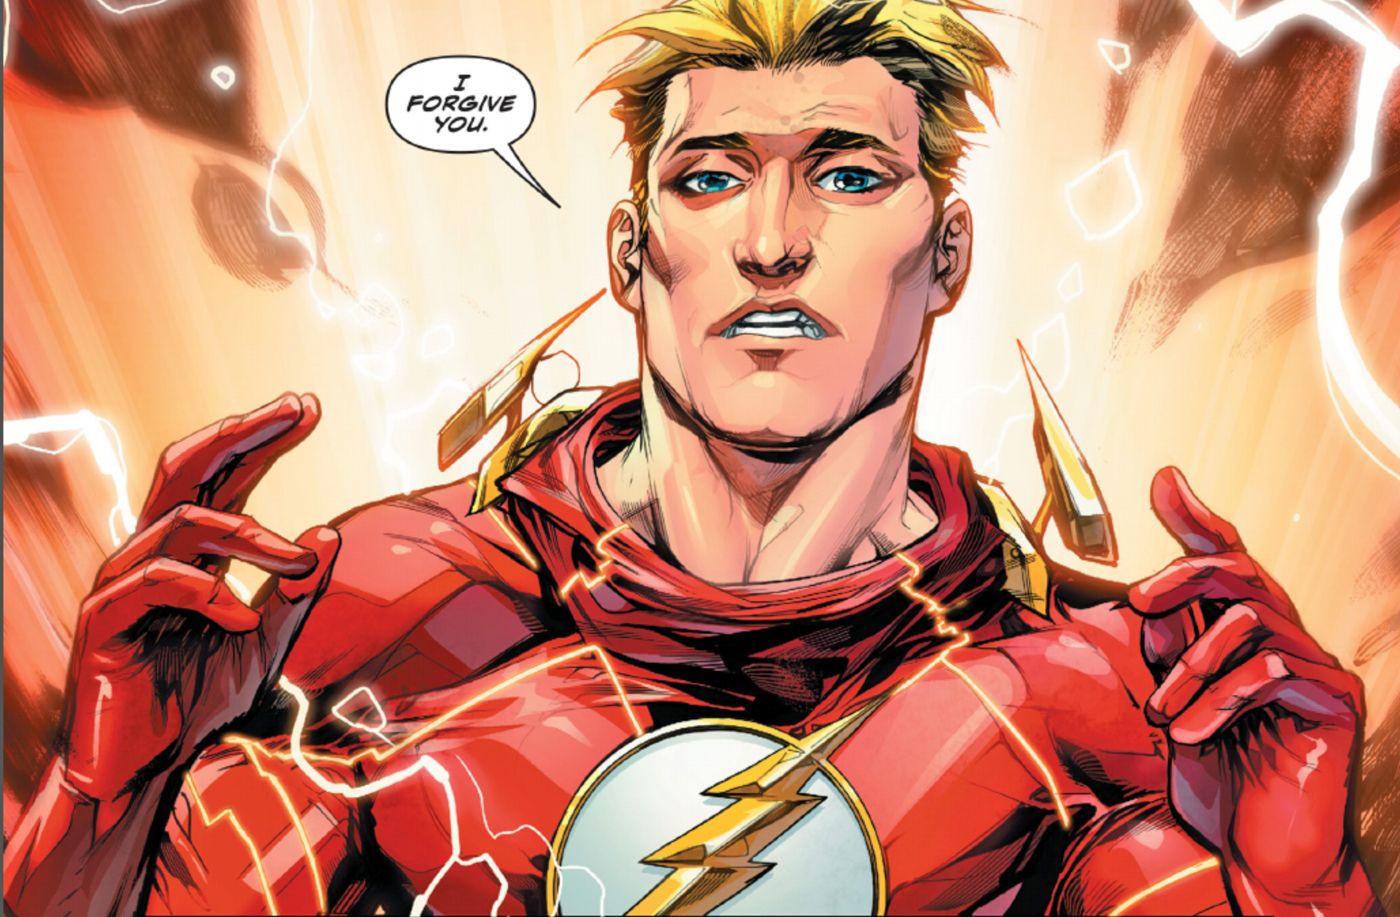 The Flash Forgives